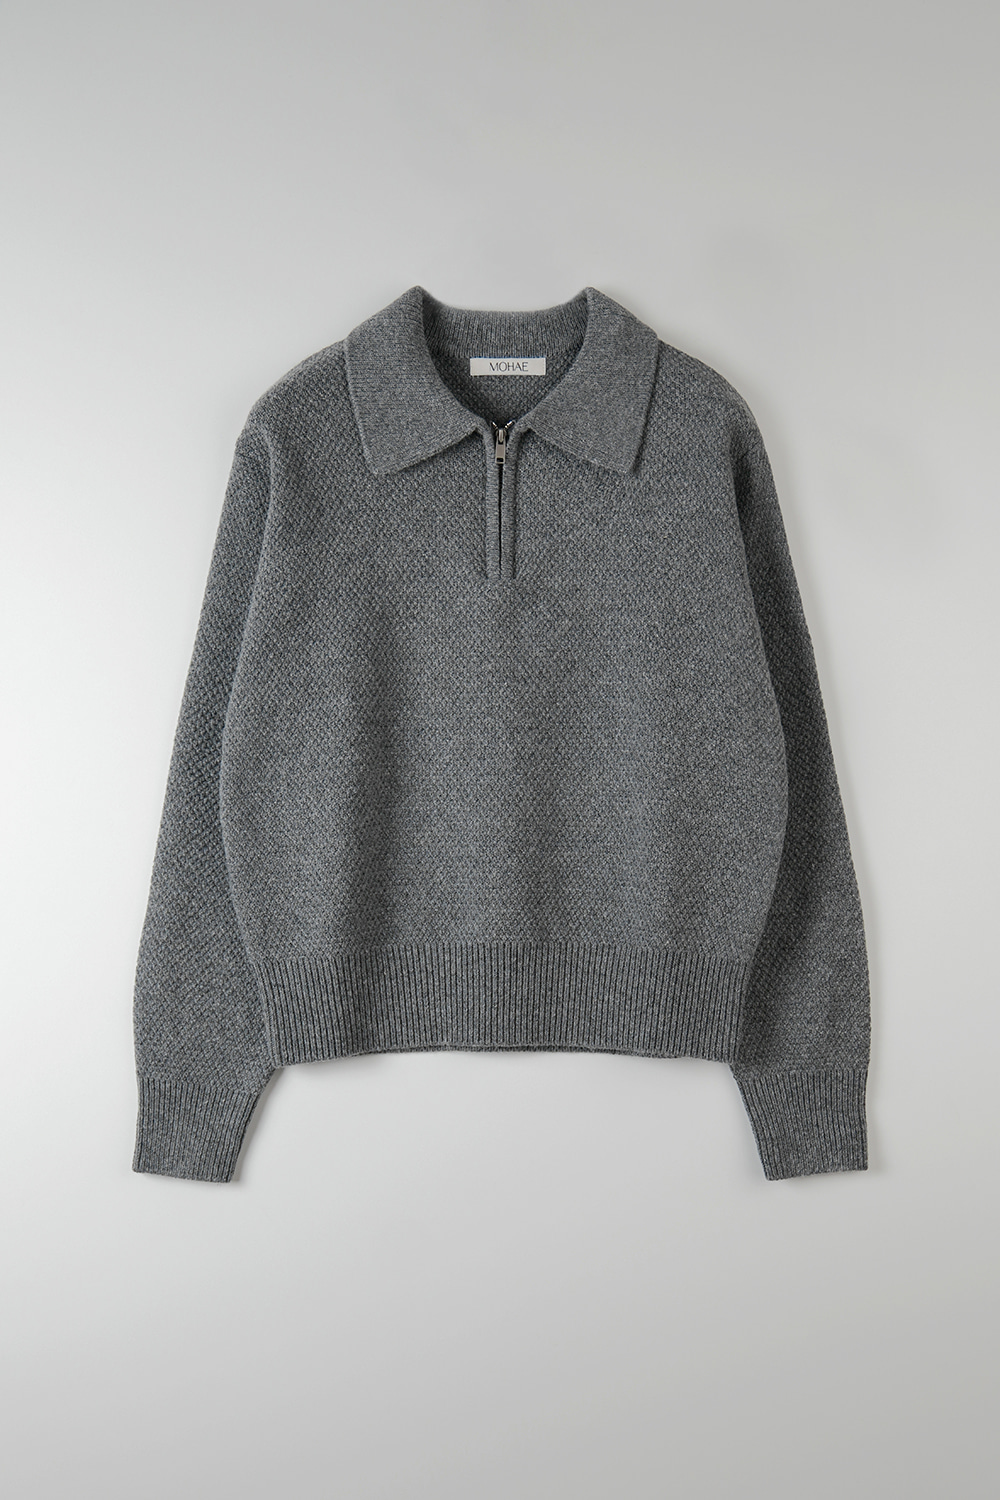 Wool collar knit _ Gray